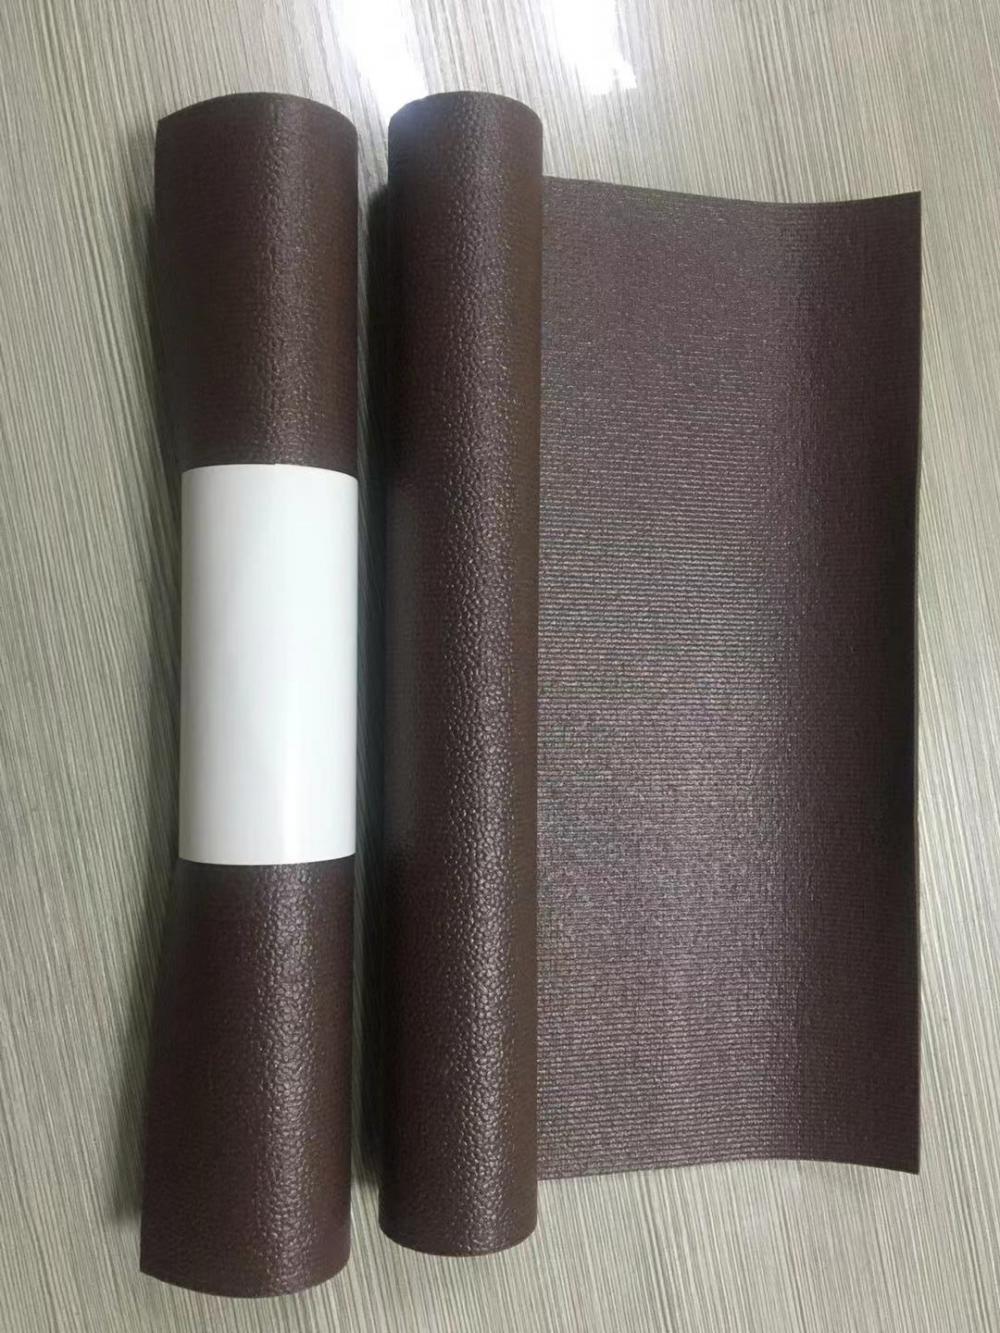 PVC anti-slip drawer liner